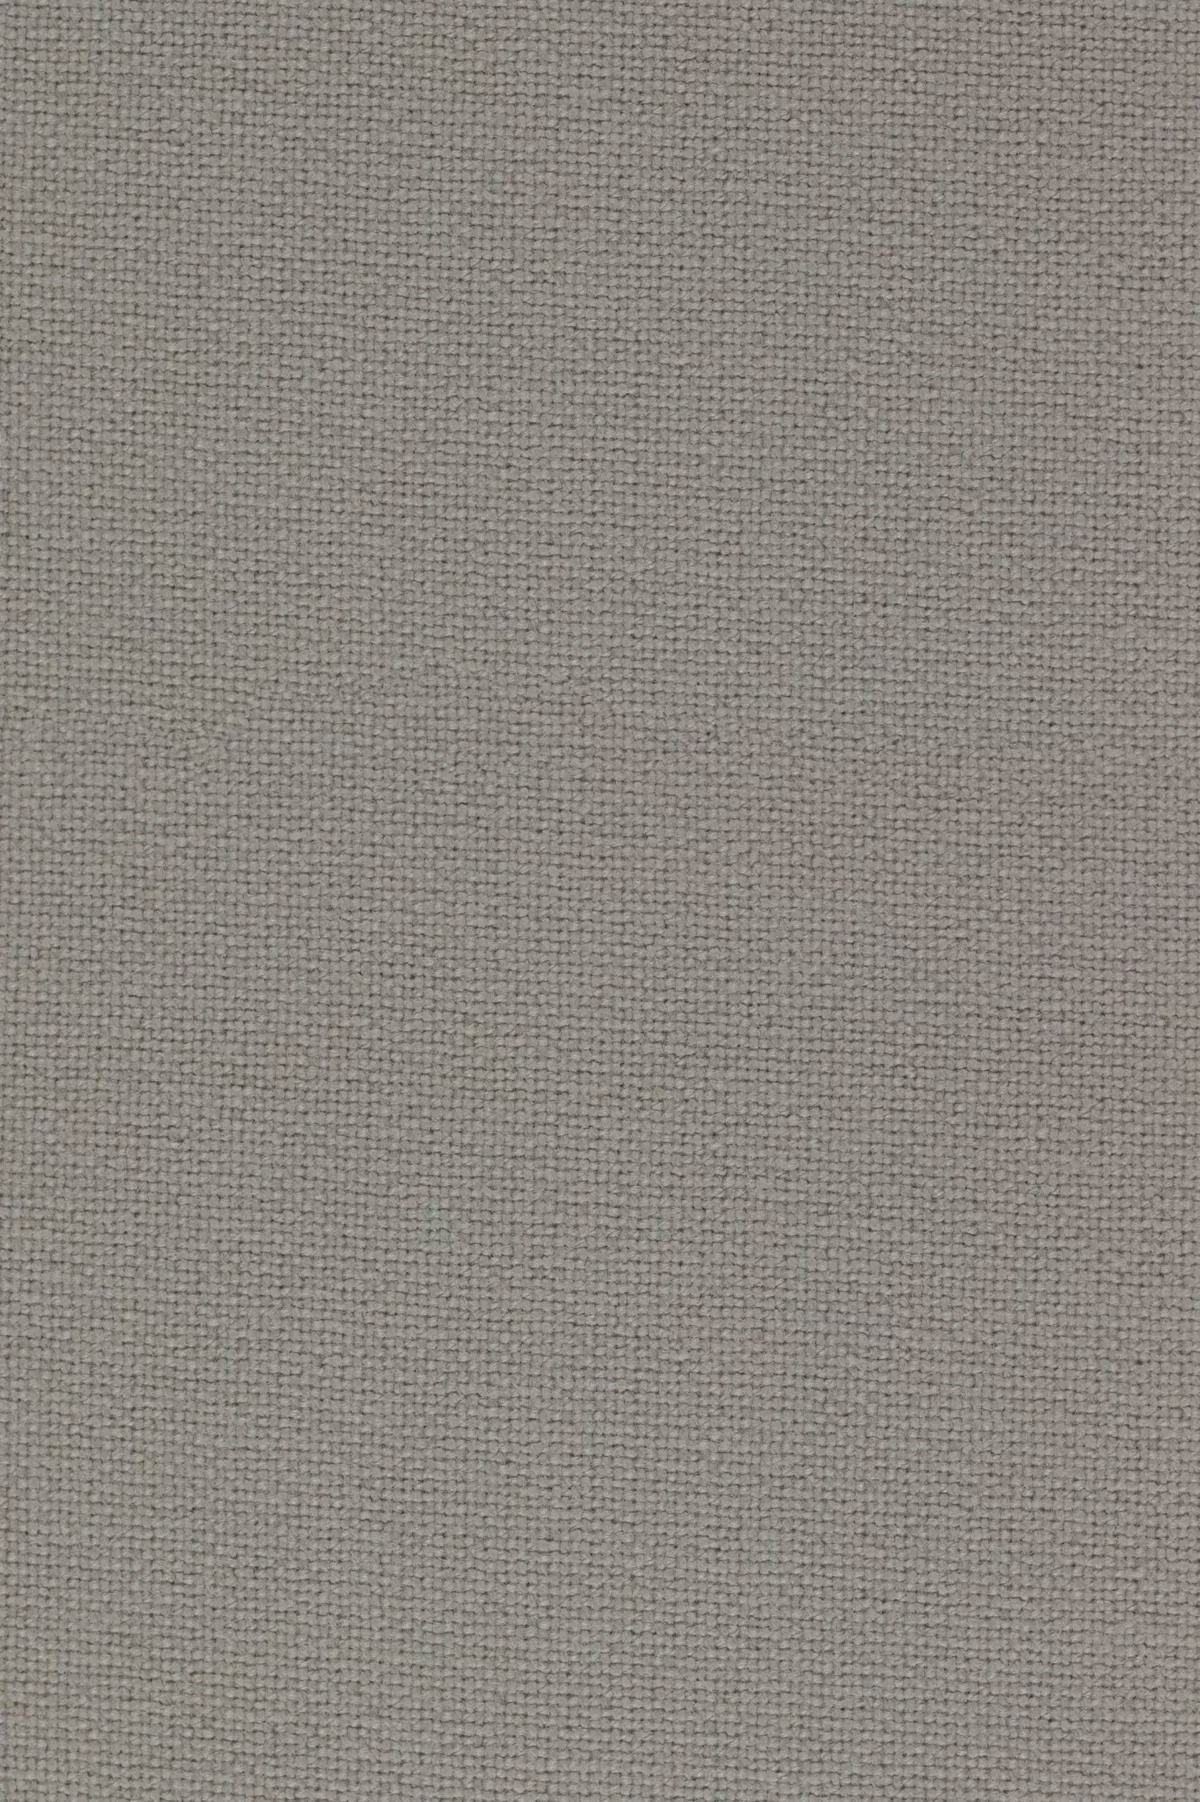 Fabric sample Hallingdal 65 113 grey